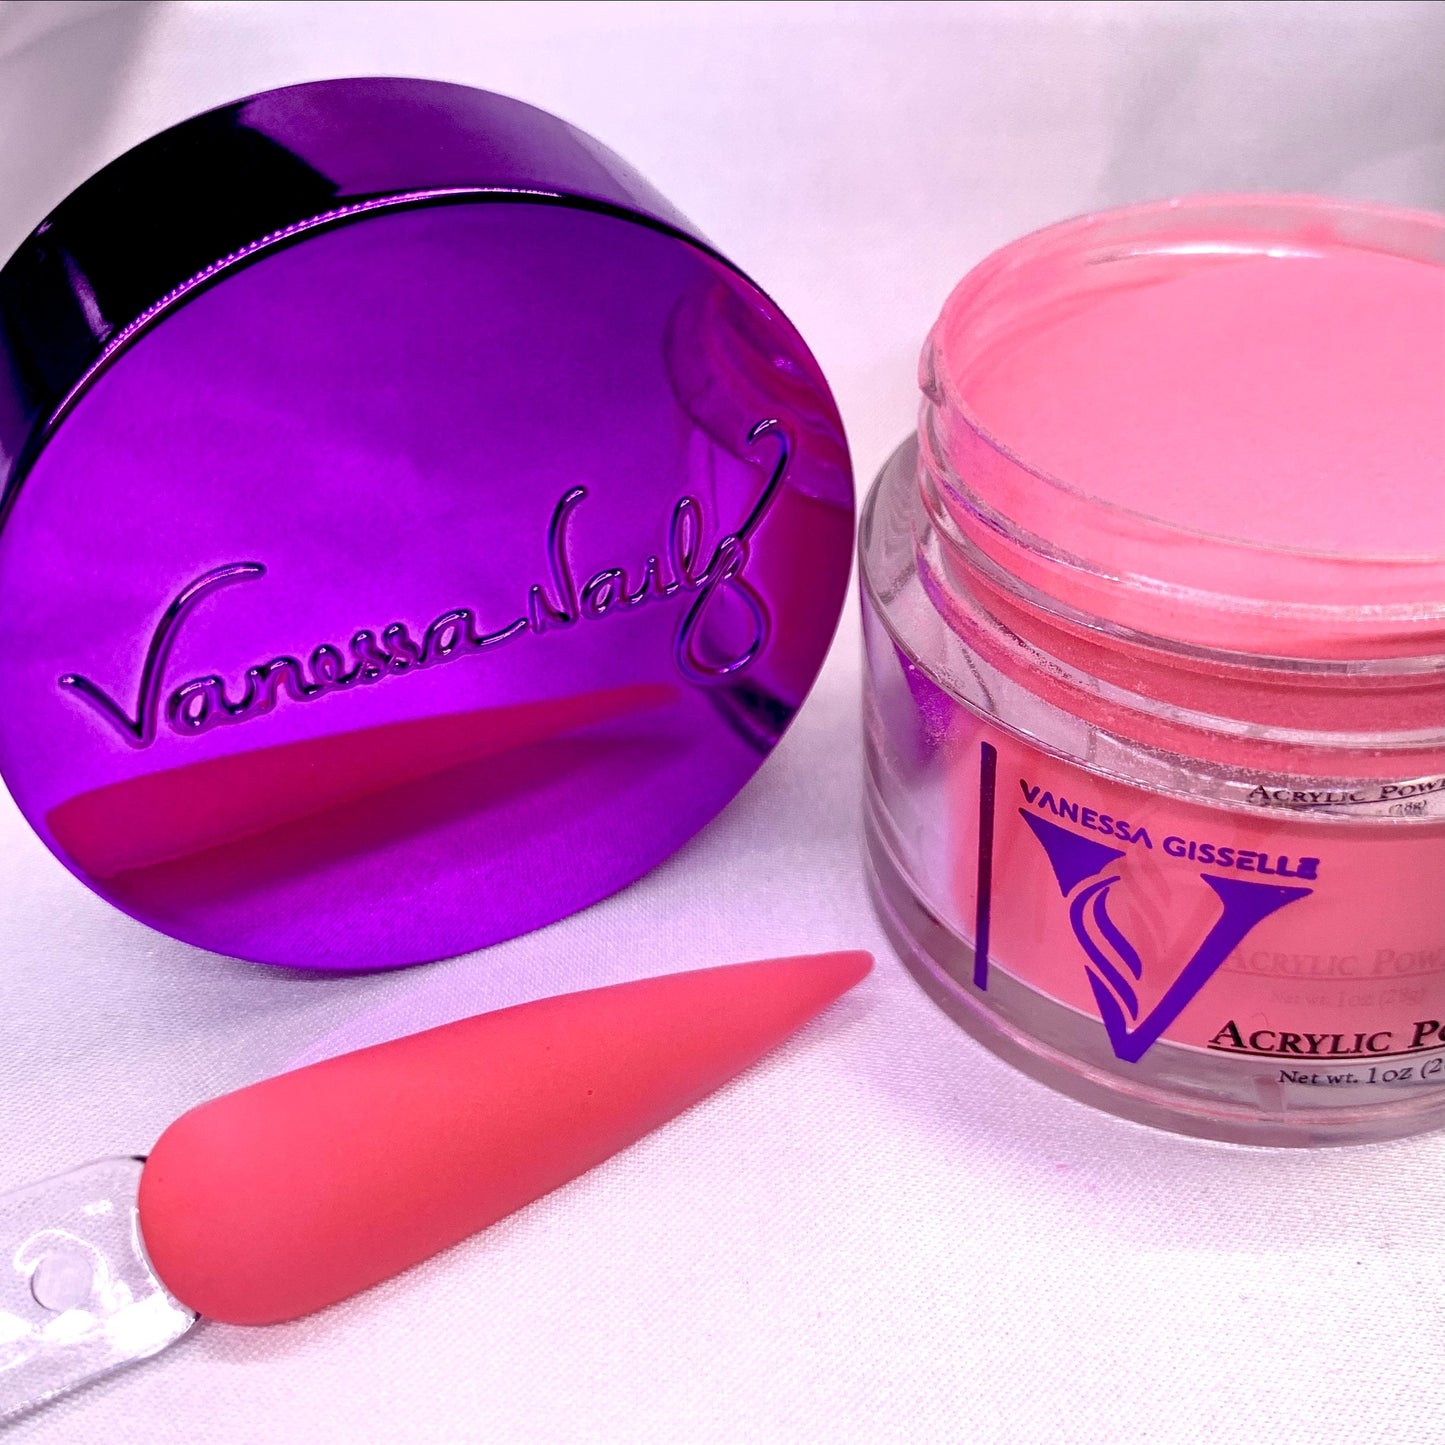 V-074 Valorous- Acrylic Powder